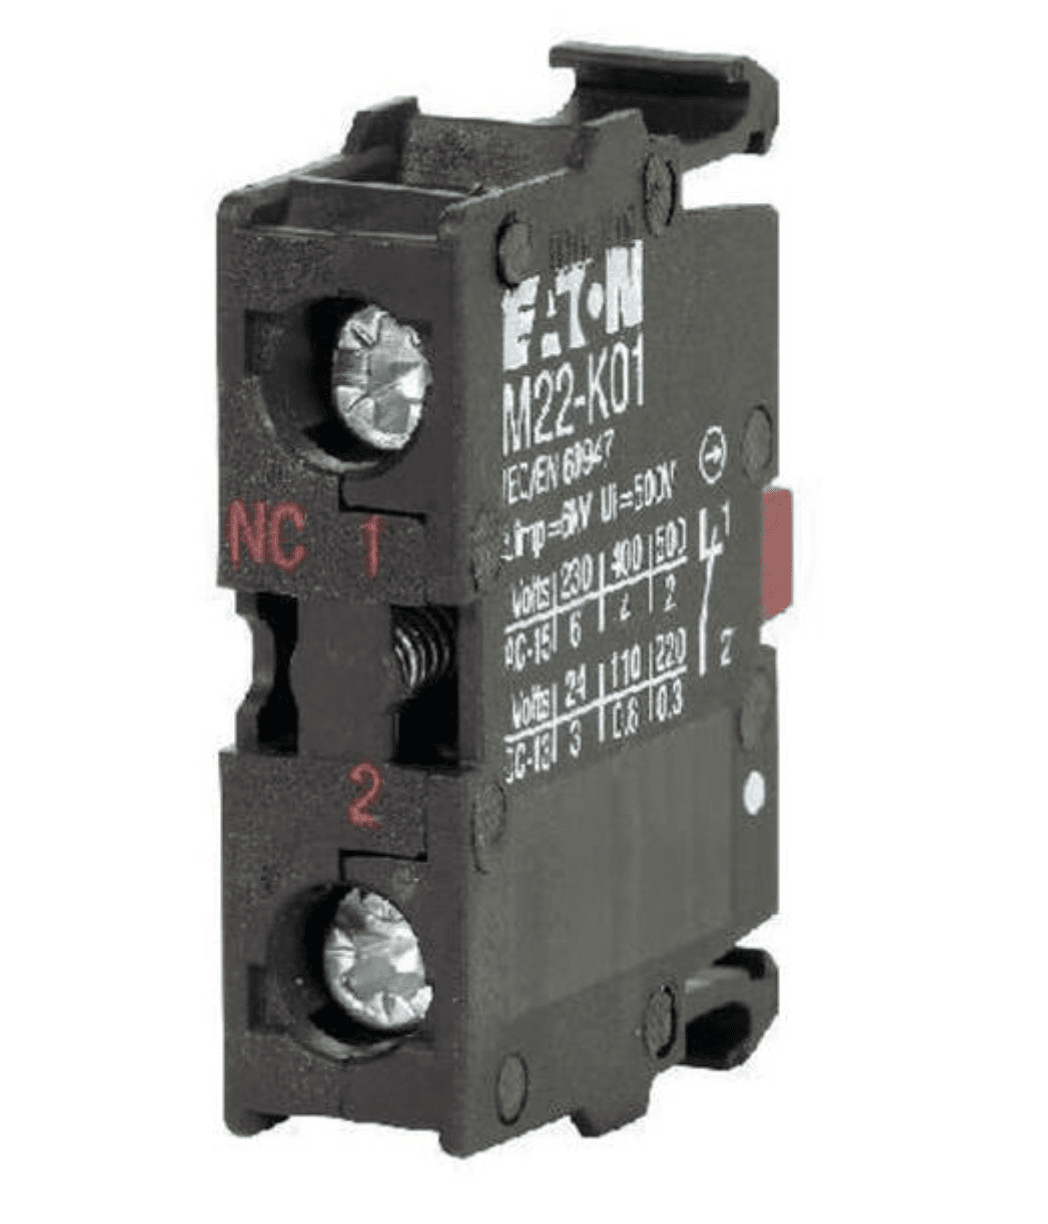 Eaton M22-K01 Eaton - M22-K01